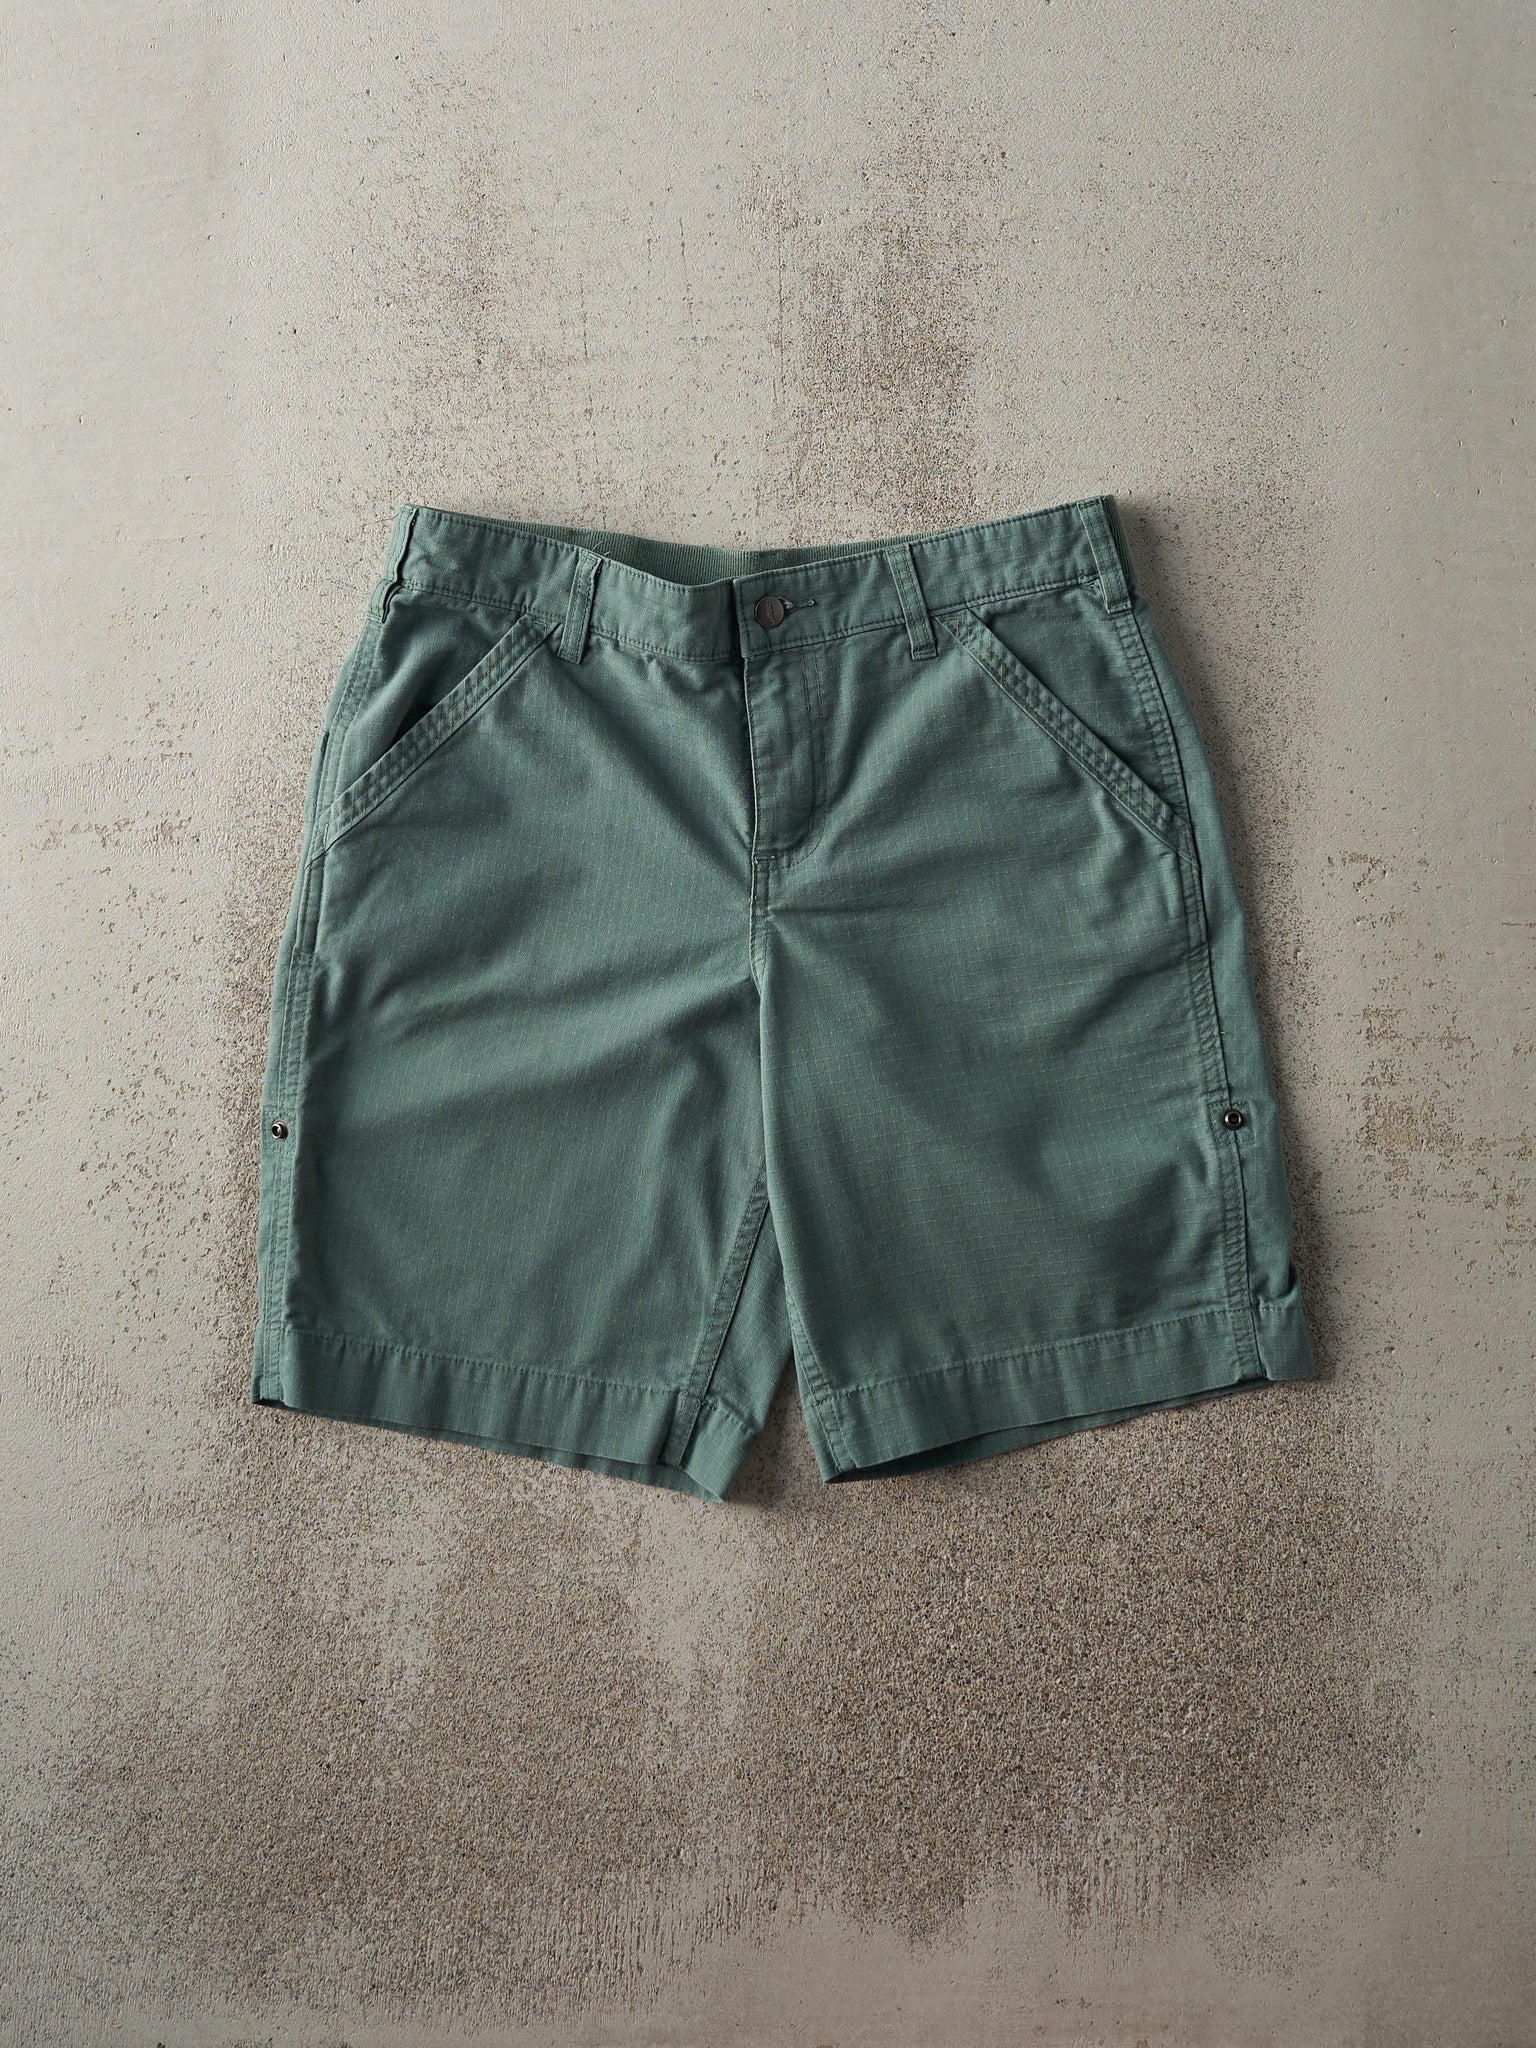 Vintage Y2K Green Carhartt Ripstop Shorts (33x9.5)